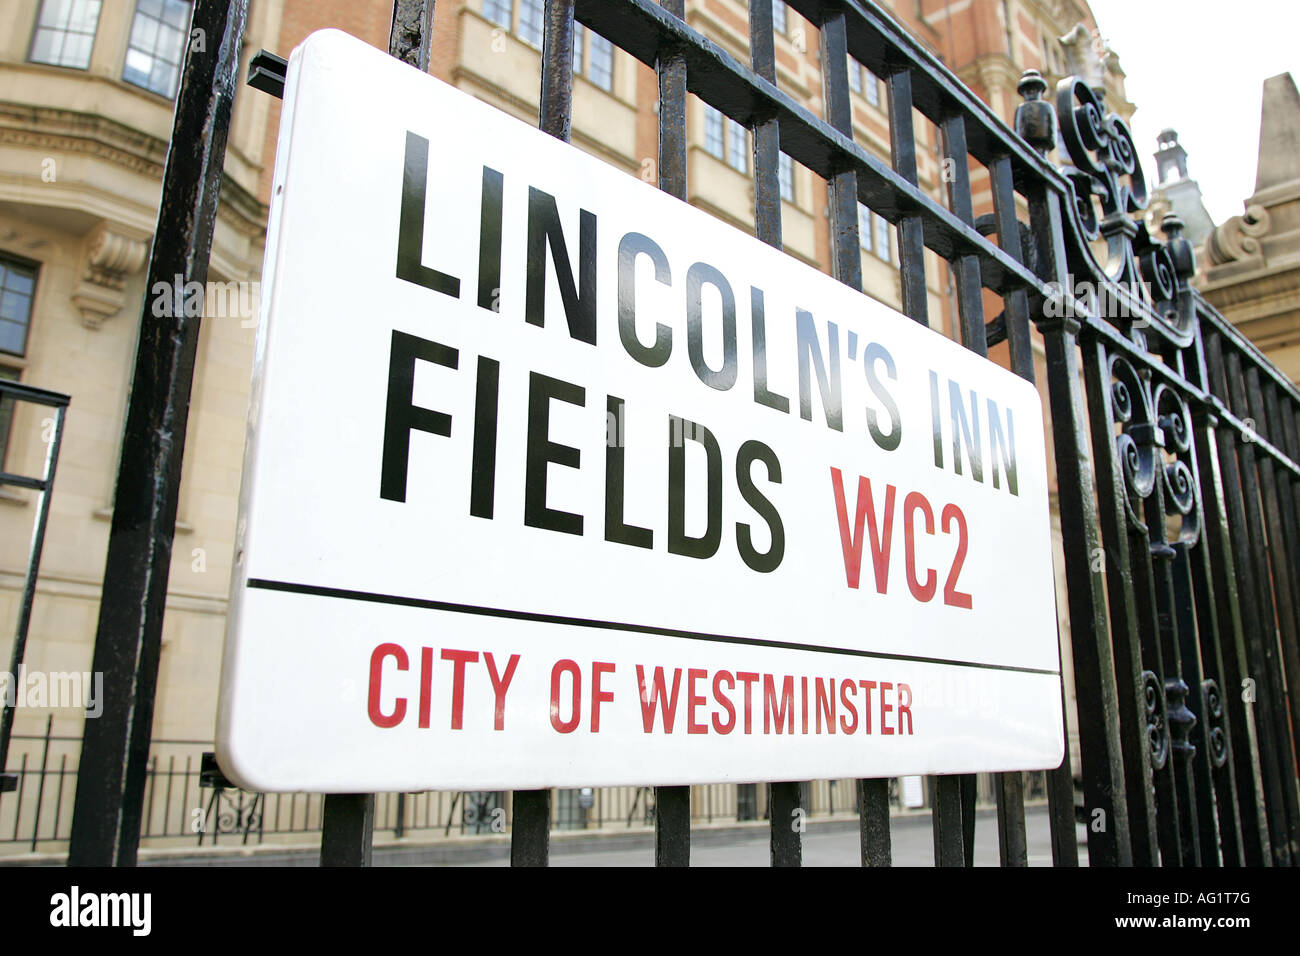 Lincoln's Inn Field London WC2 Stock Photo